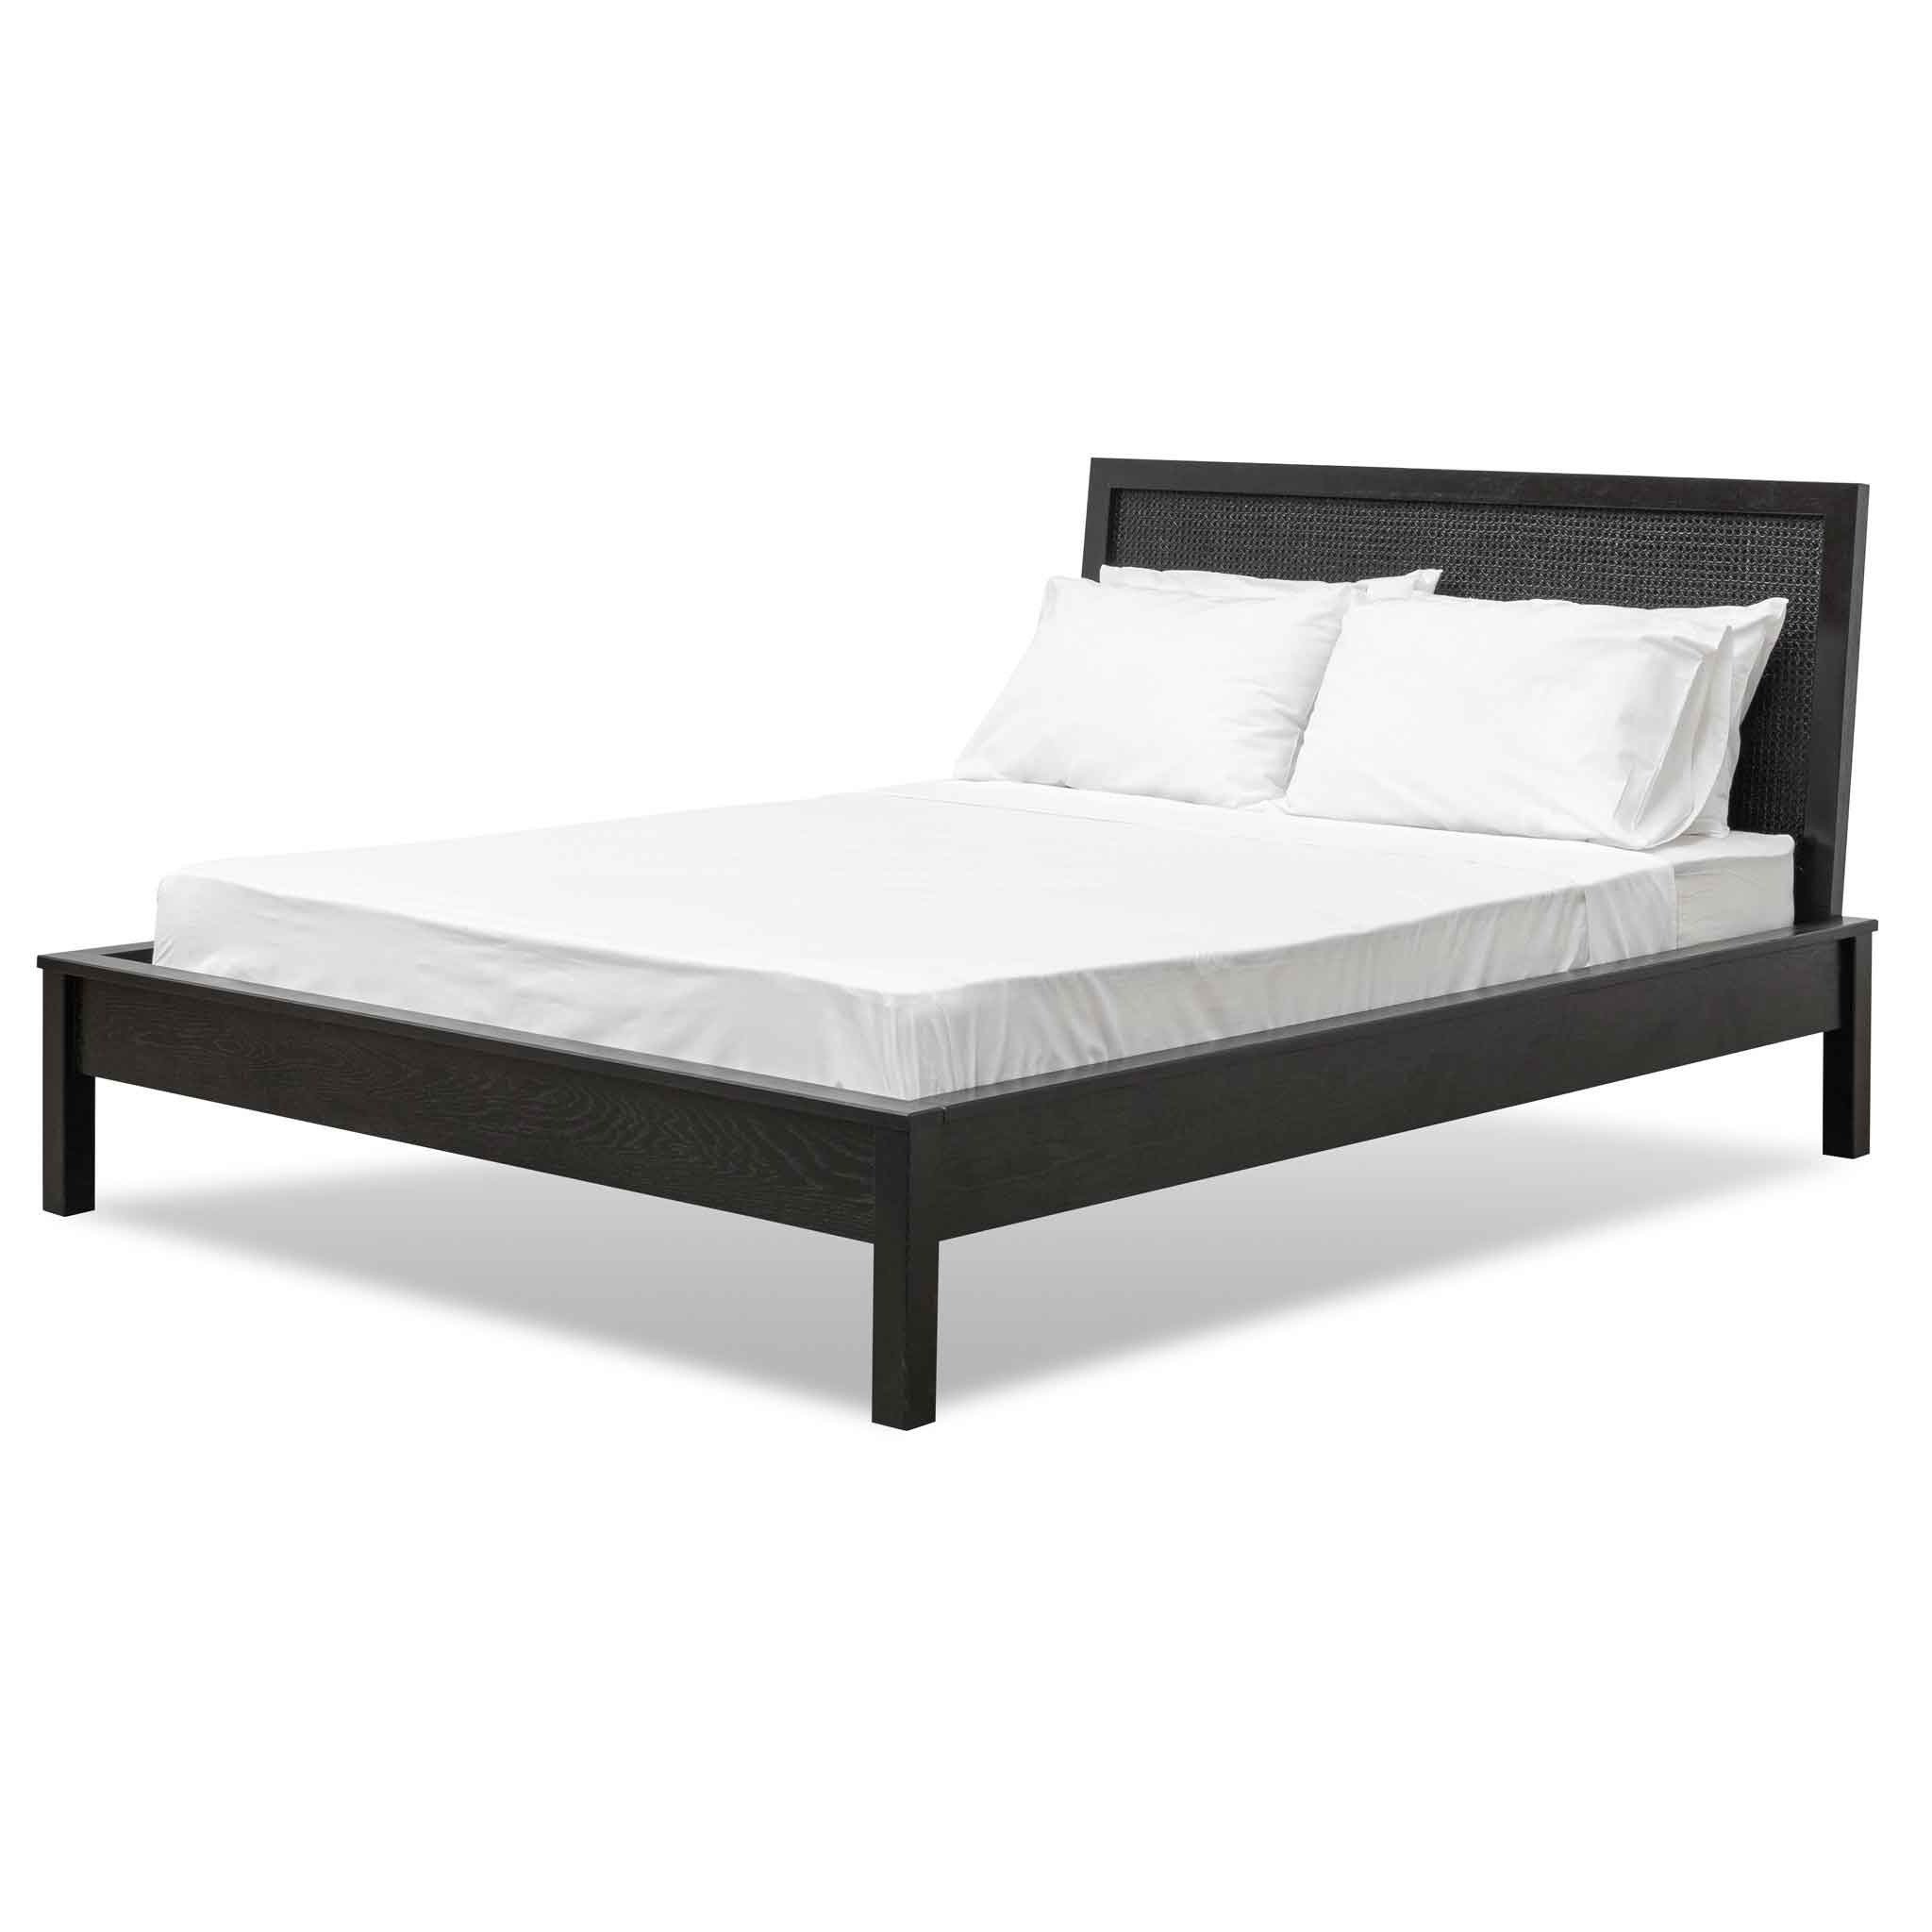 Olivia Wooden Queen Bed Frame - Black Rattan - Beds